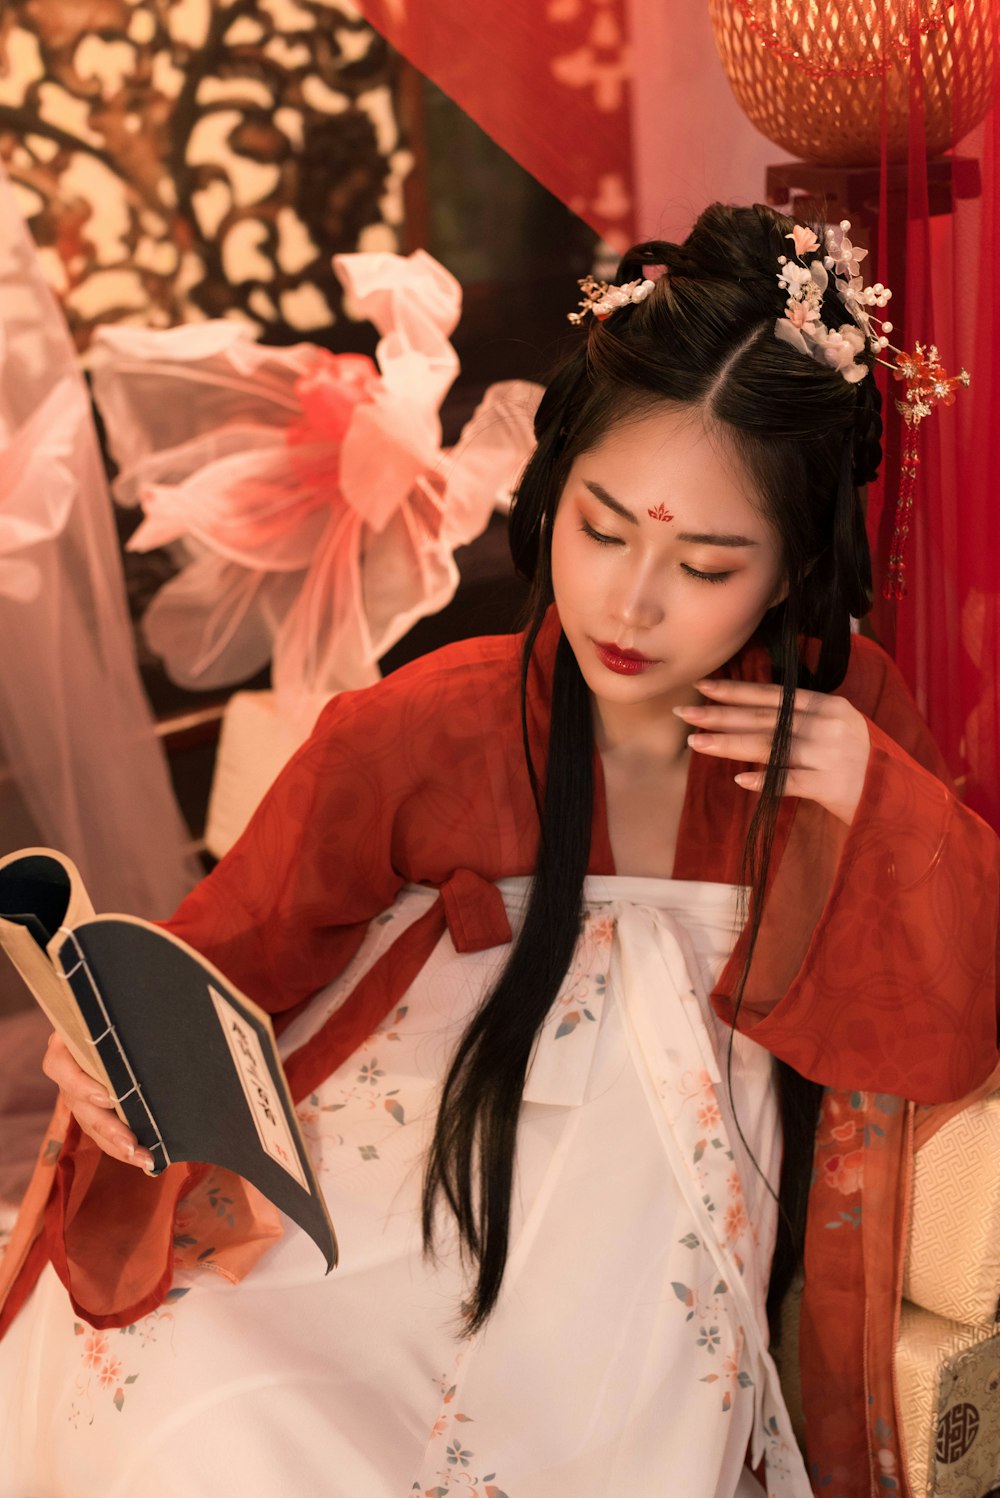 a woman in a red kimono reading a book